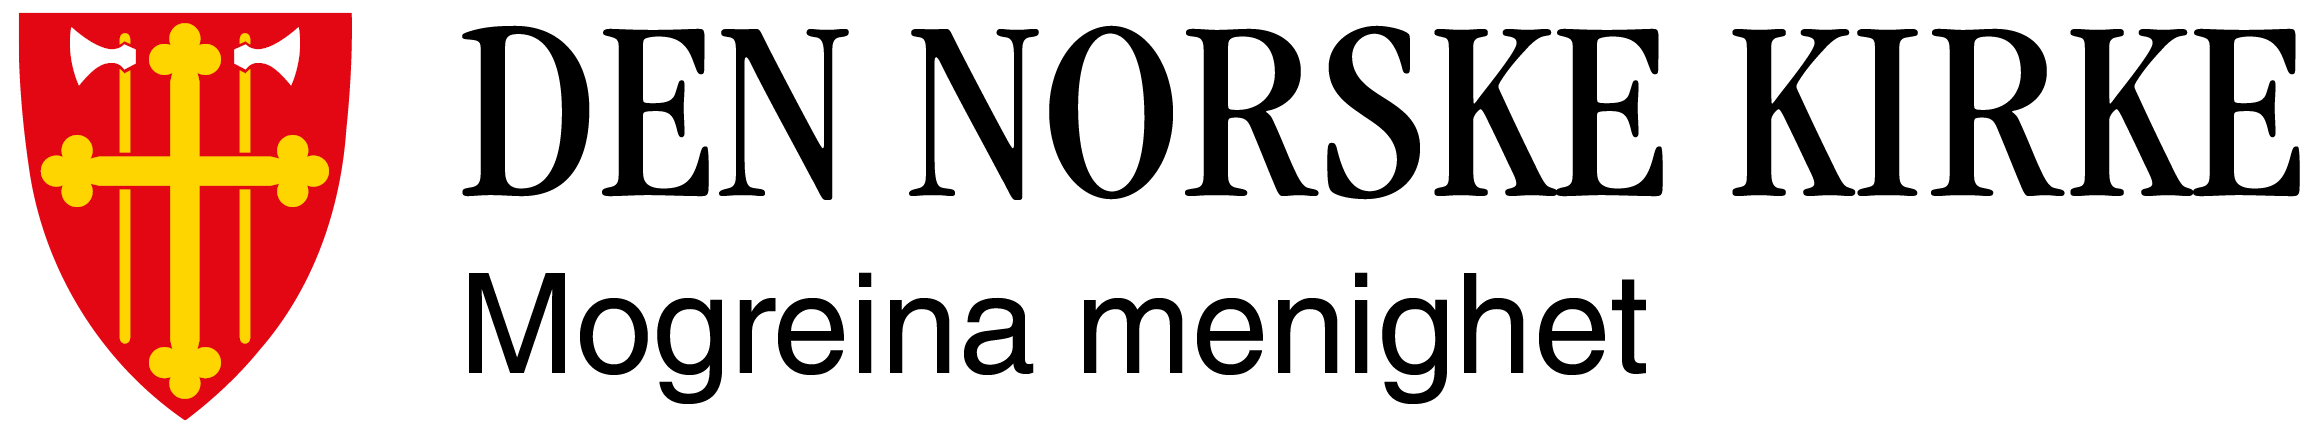 Mogreina menighet logo